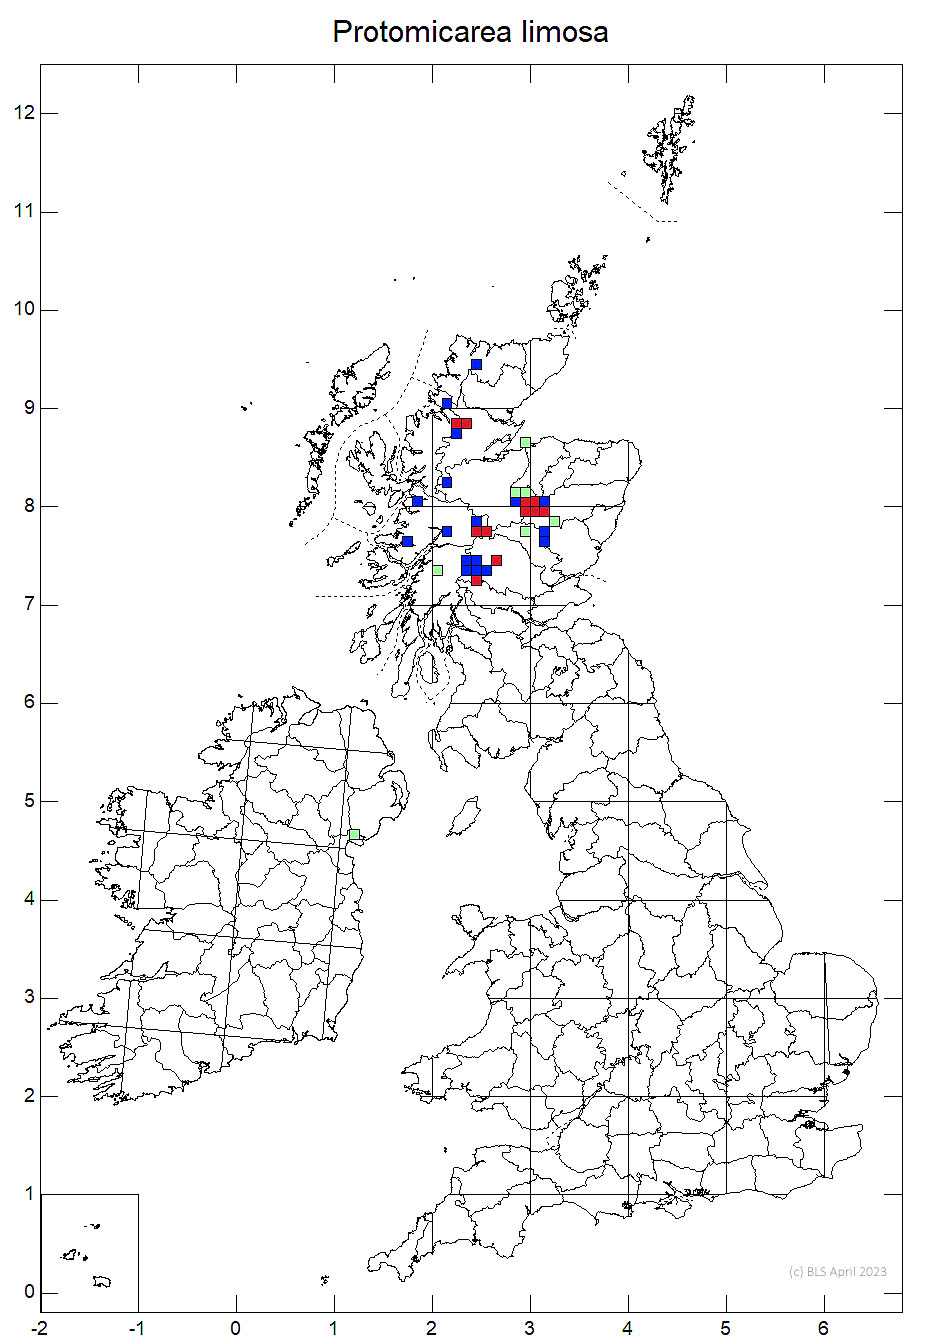 Protomicarea limosa 10km sq distribution map